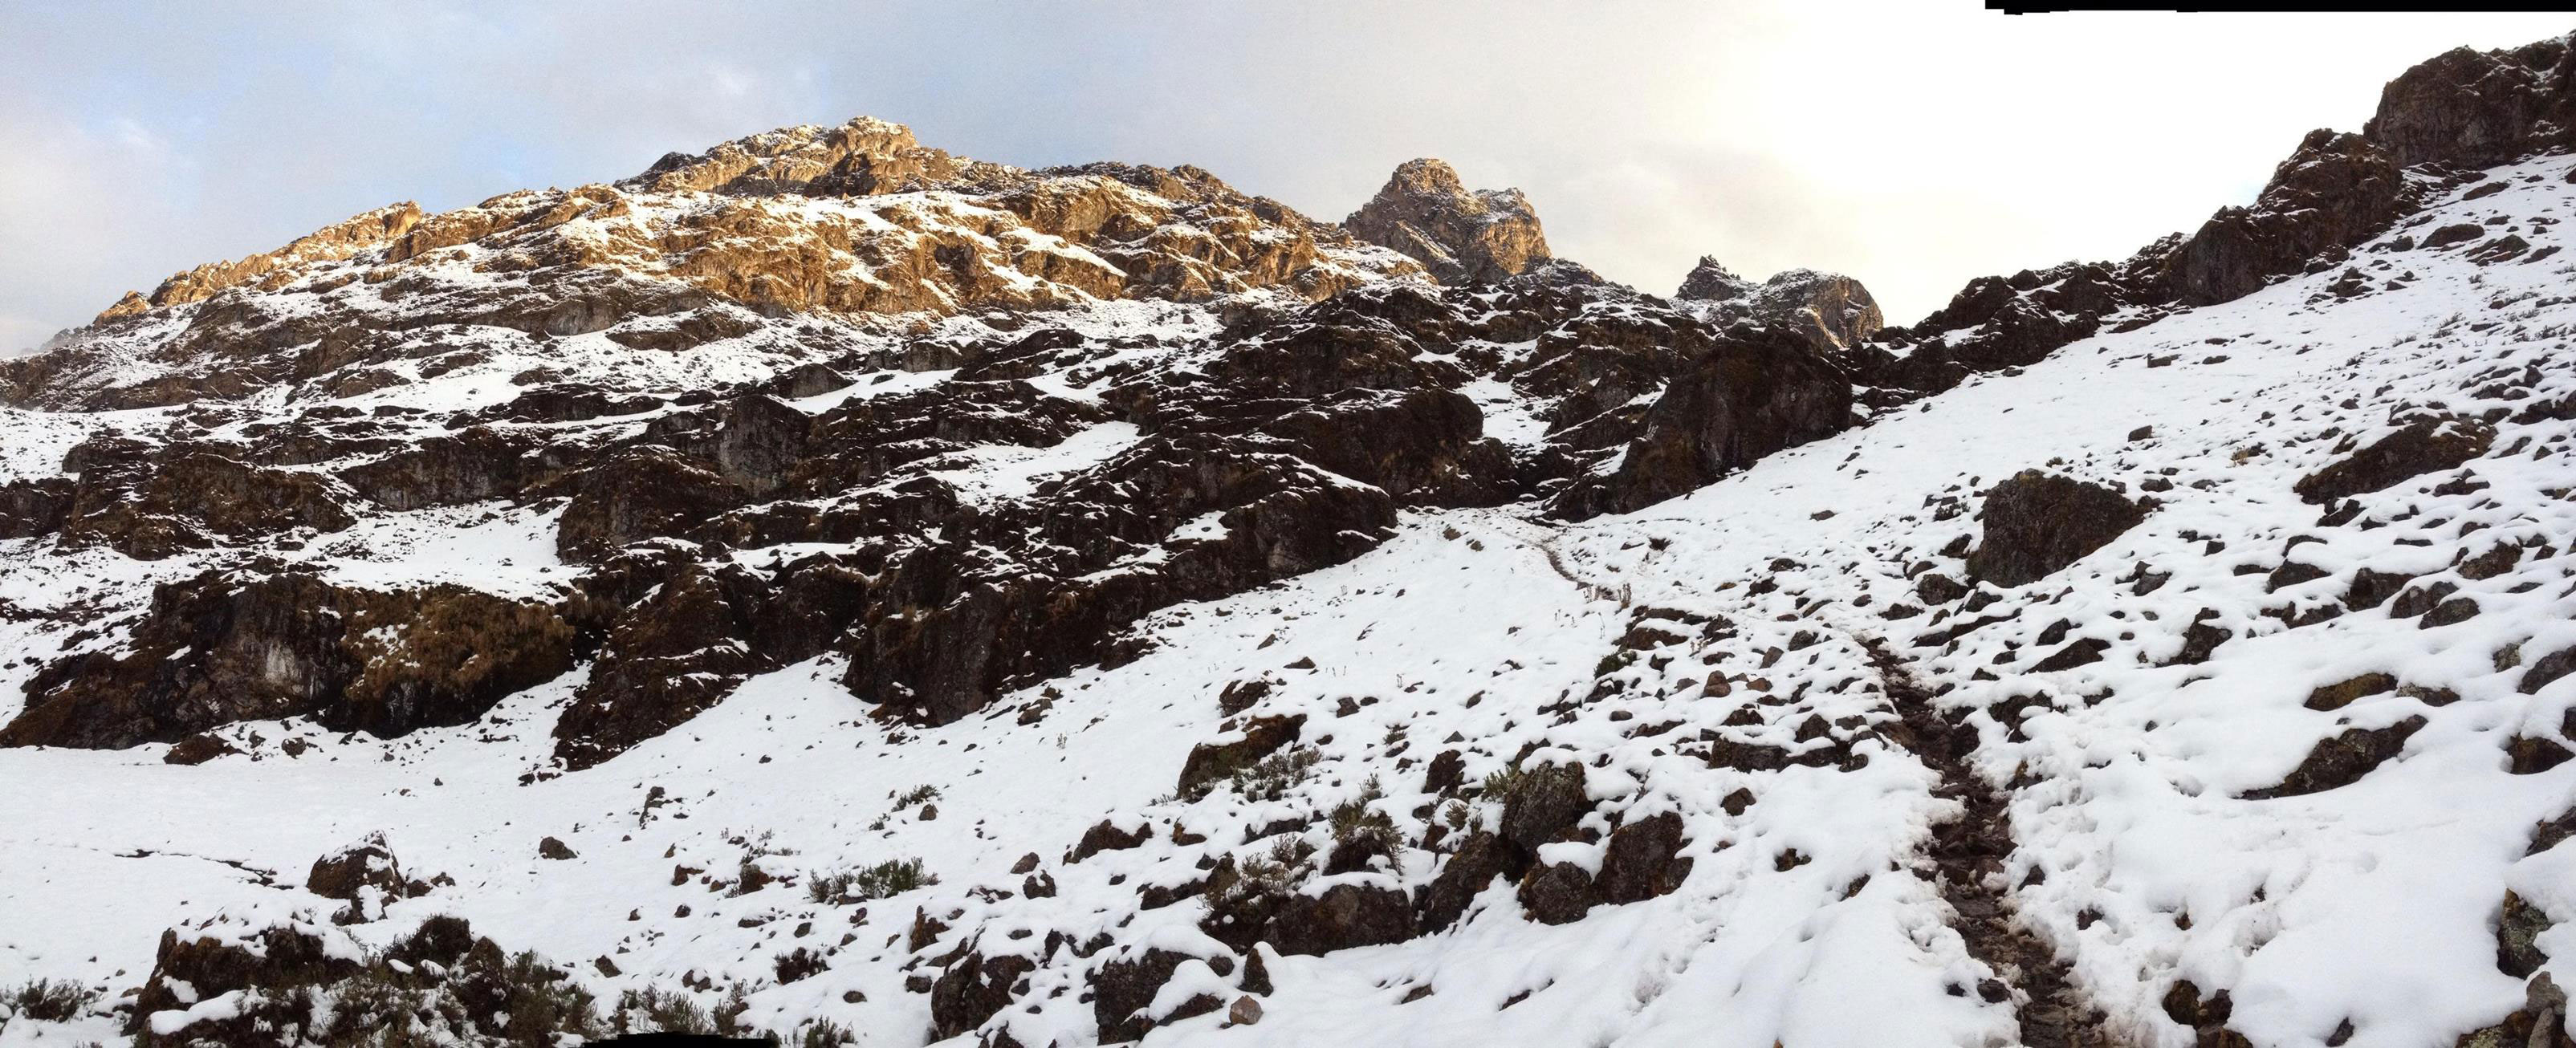 Peru: Summitting before sunset, again